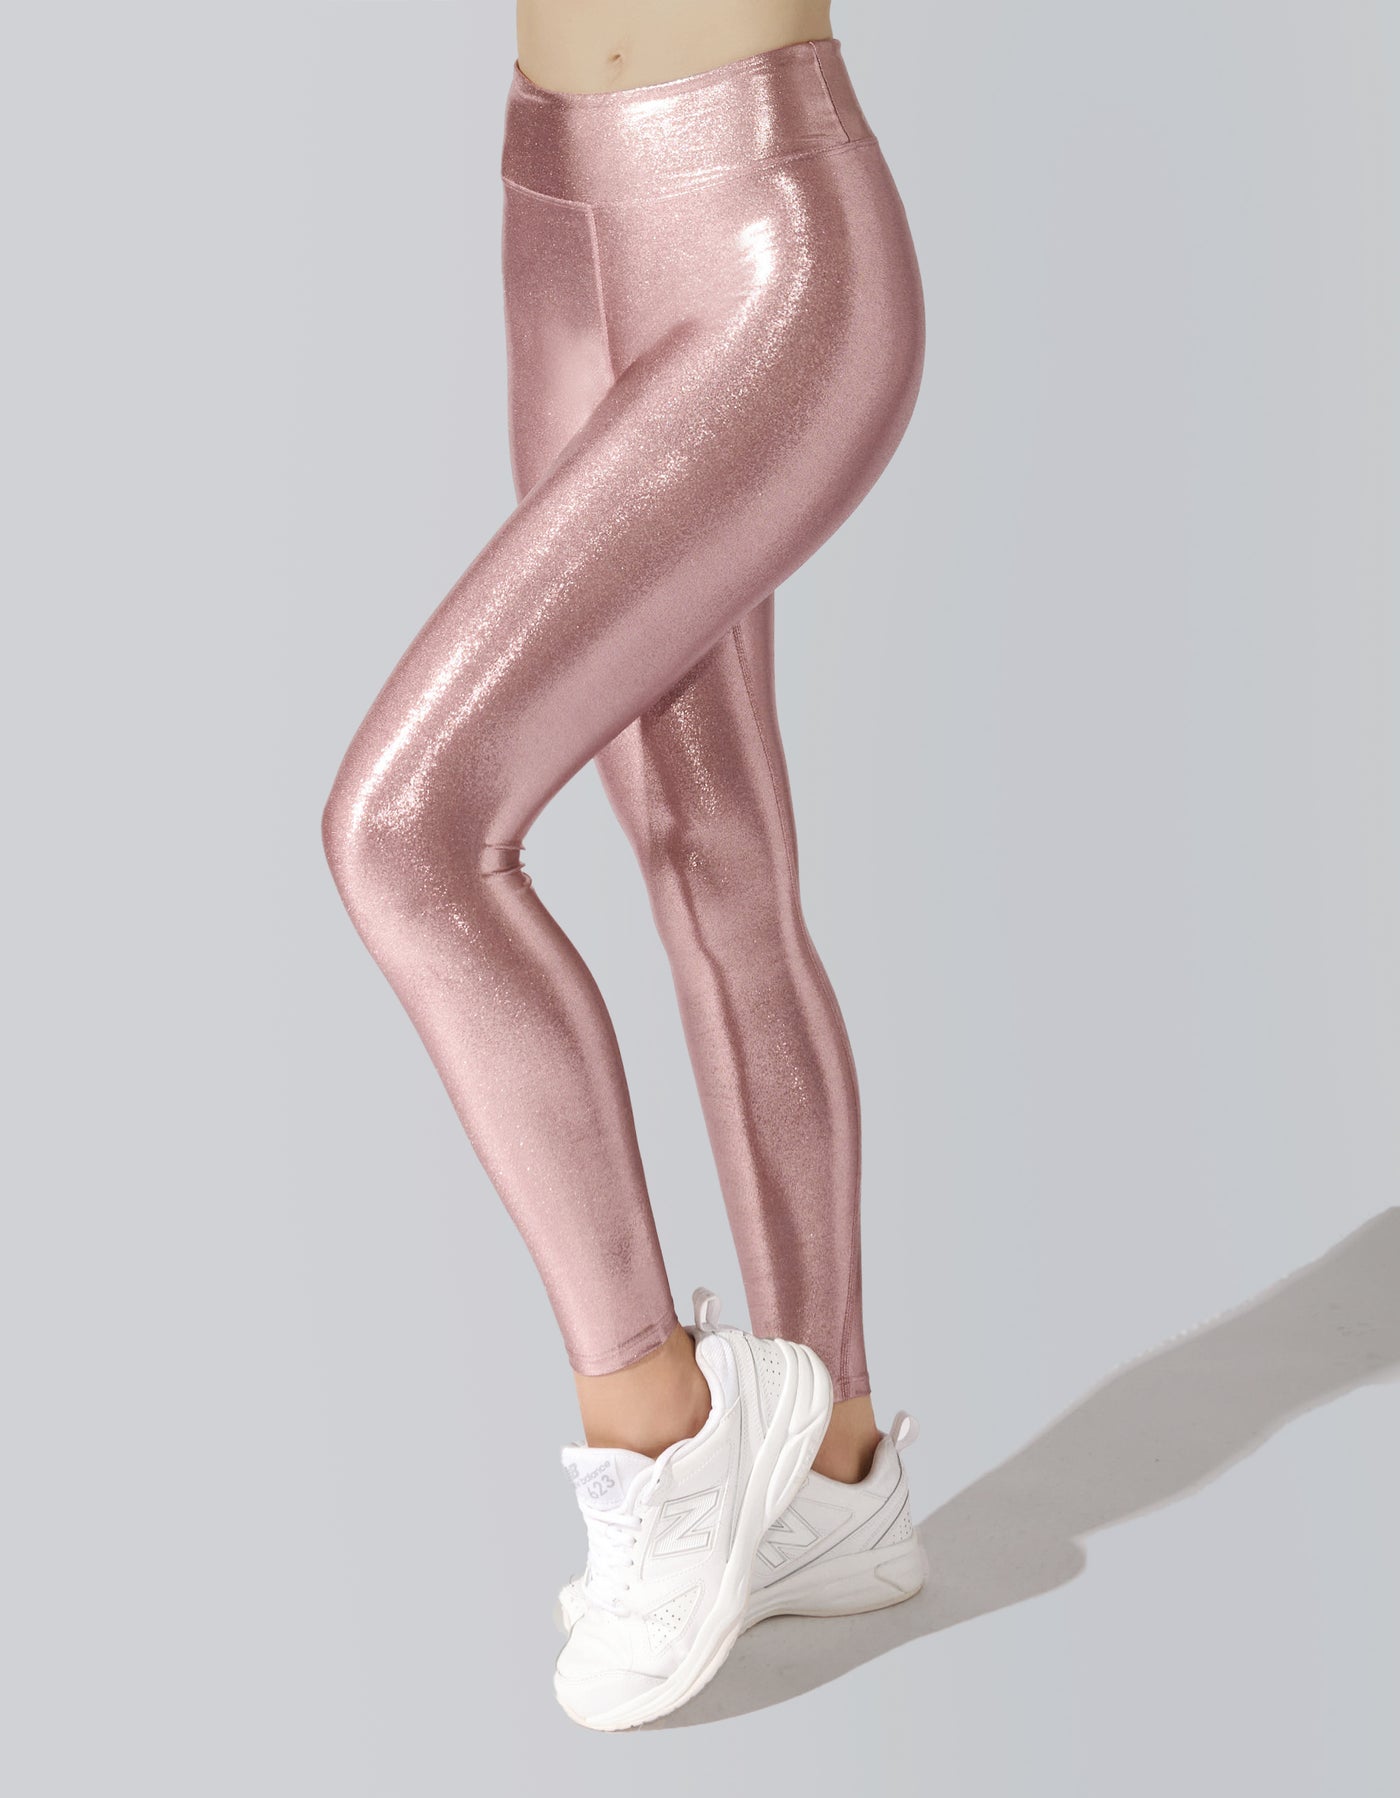 Heroine Sport Marvel Leggings in Pink